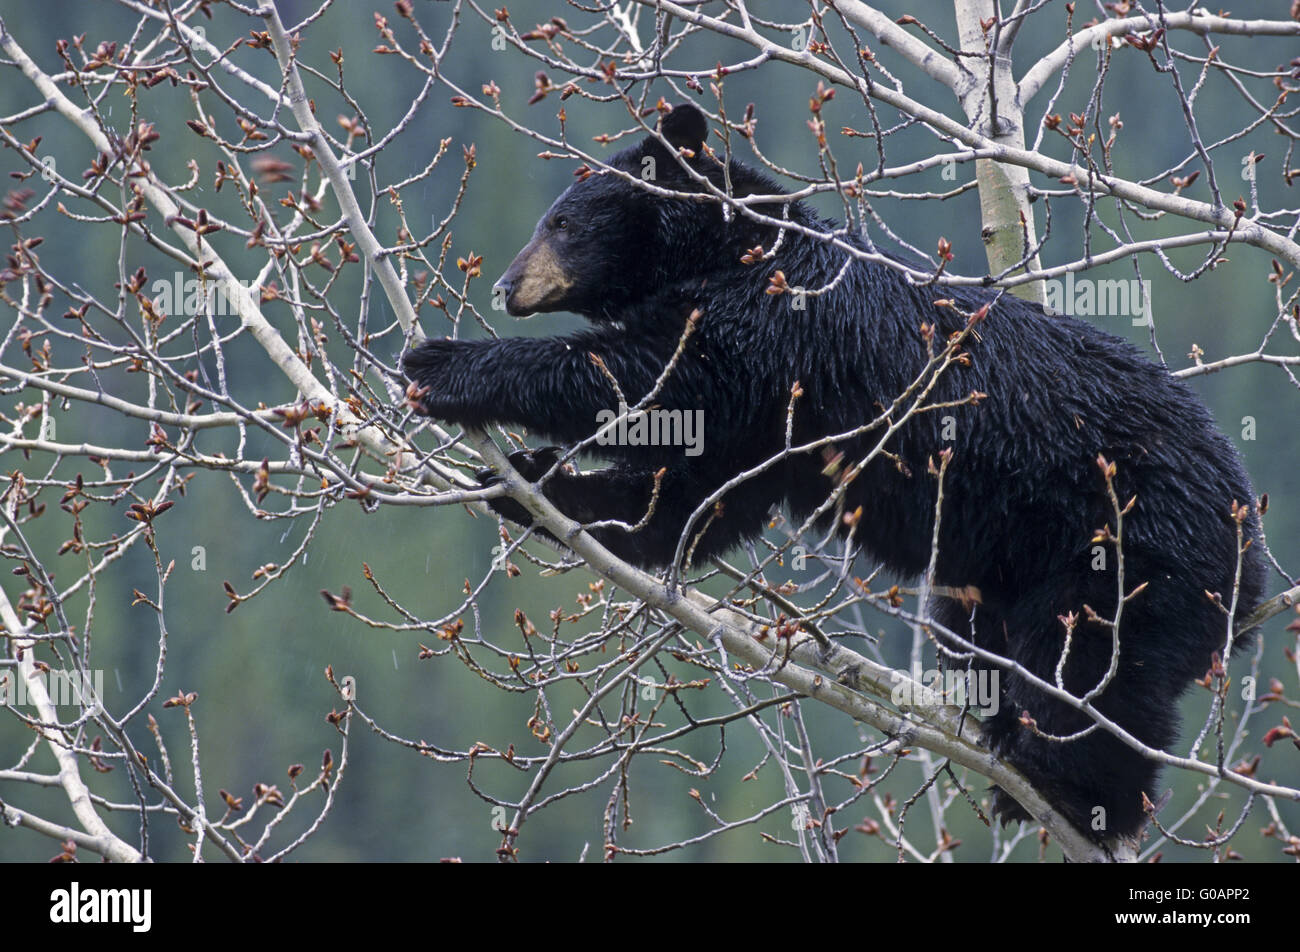 One Black Bear sow climbing in an aspen tree Stock Photo